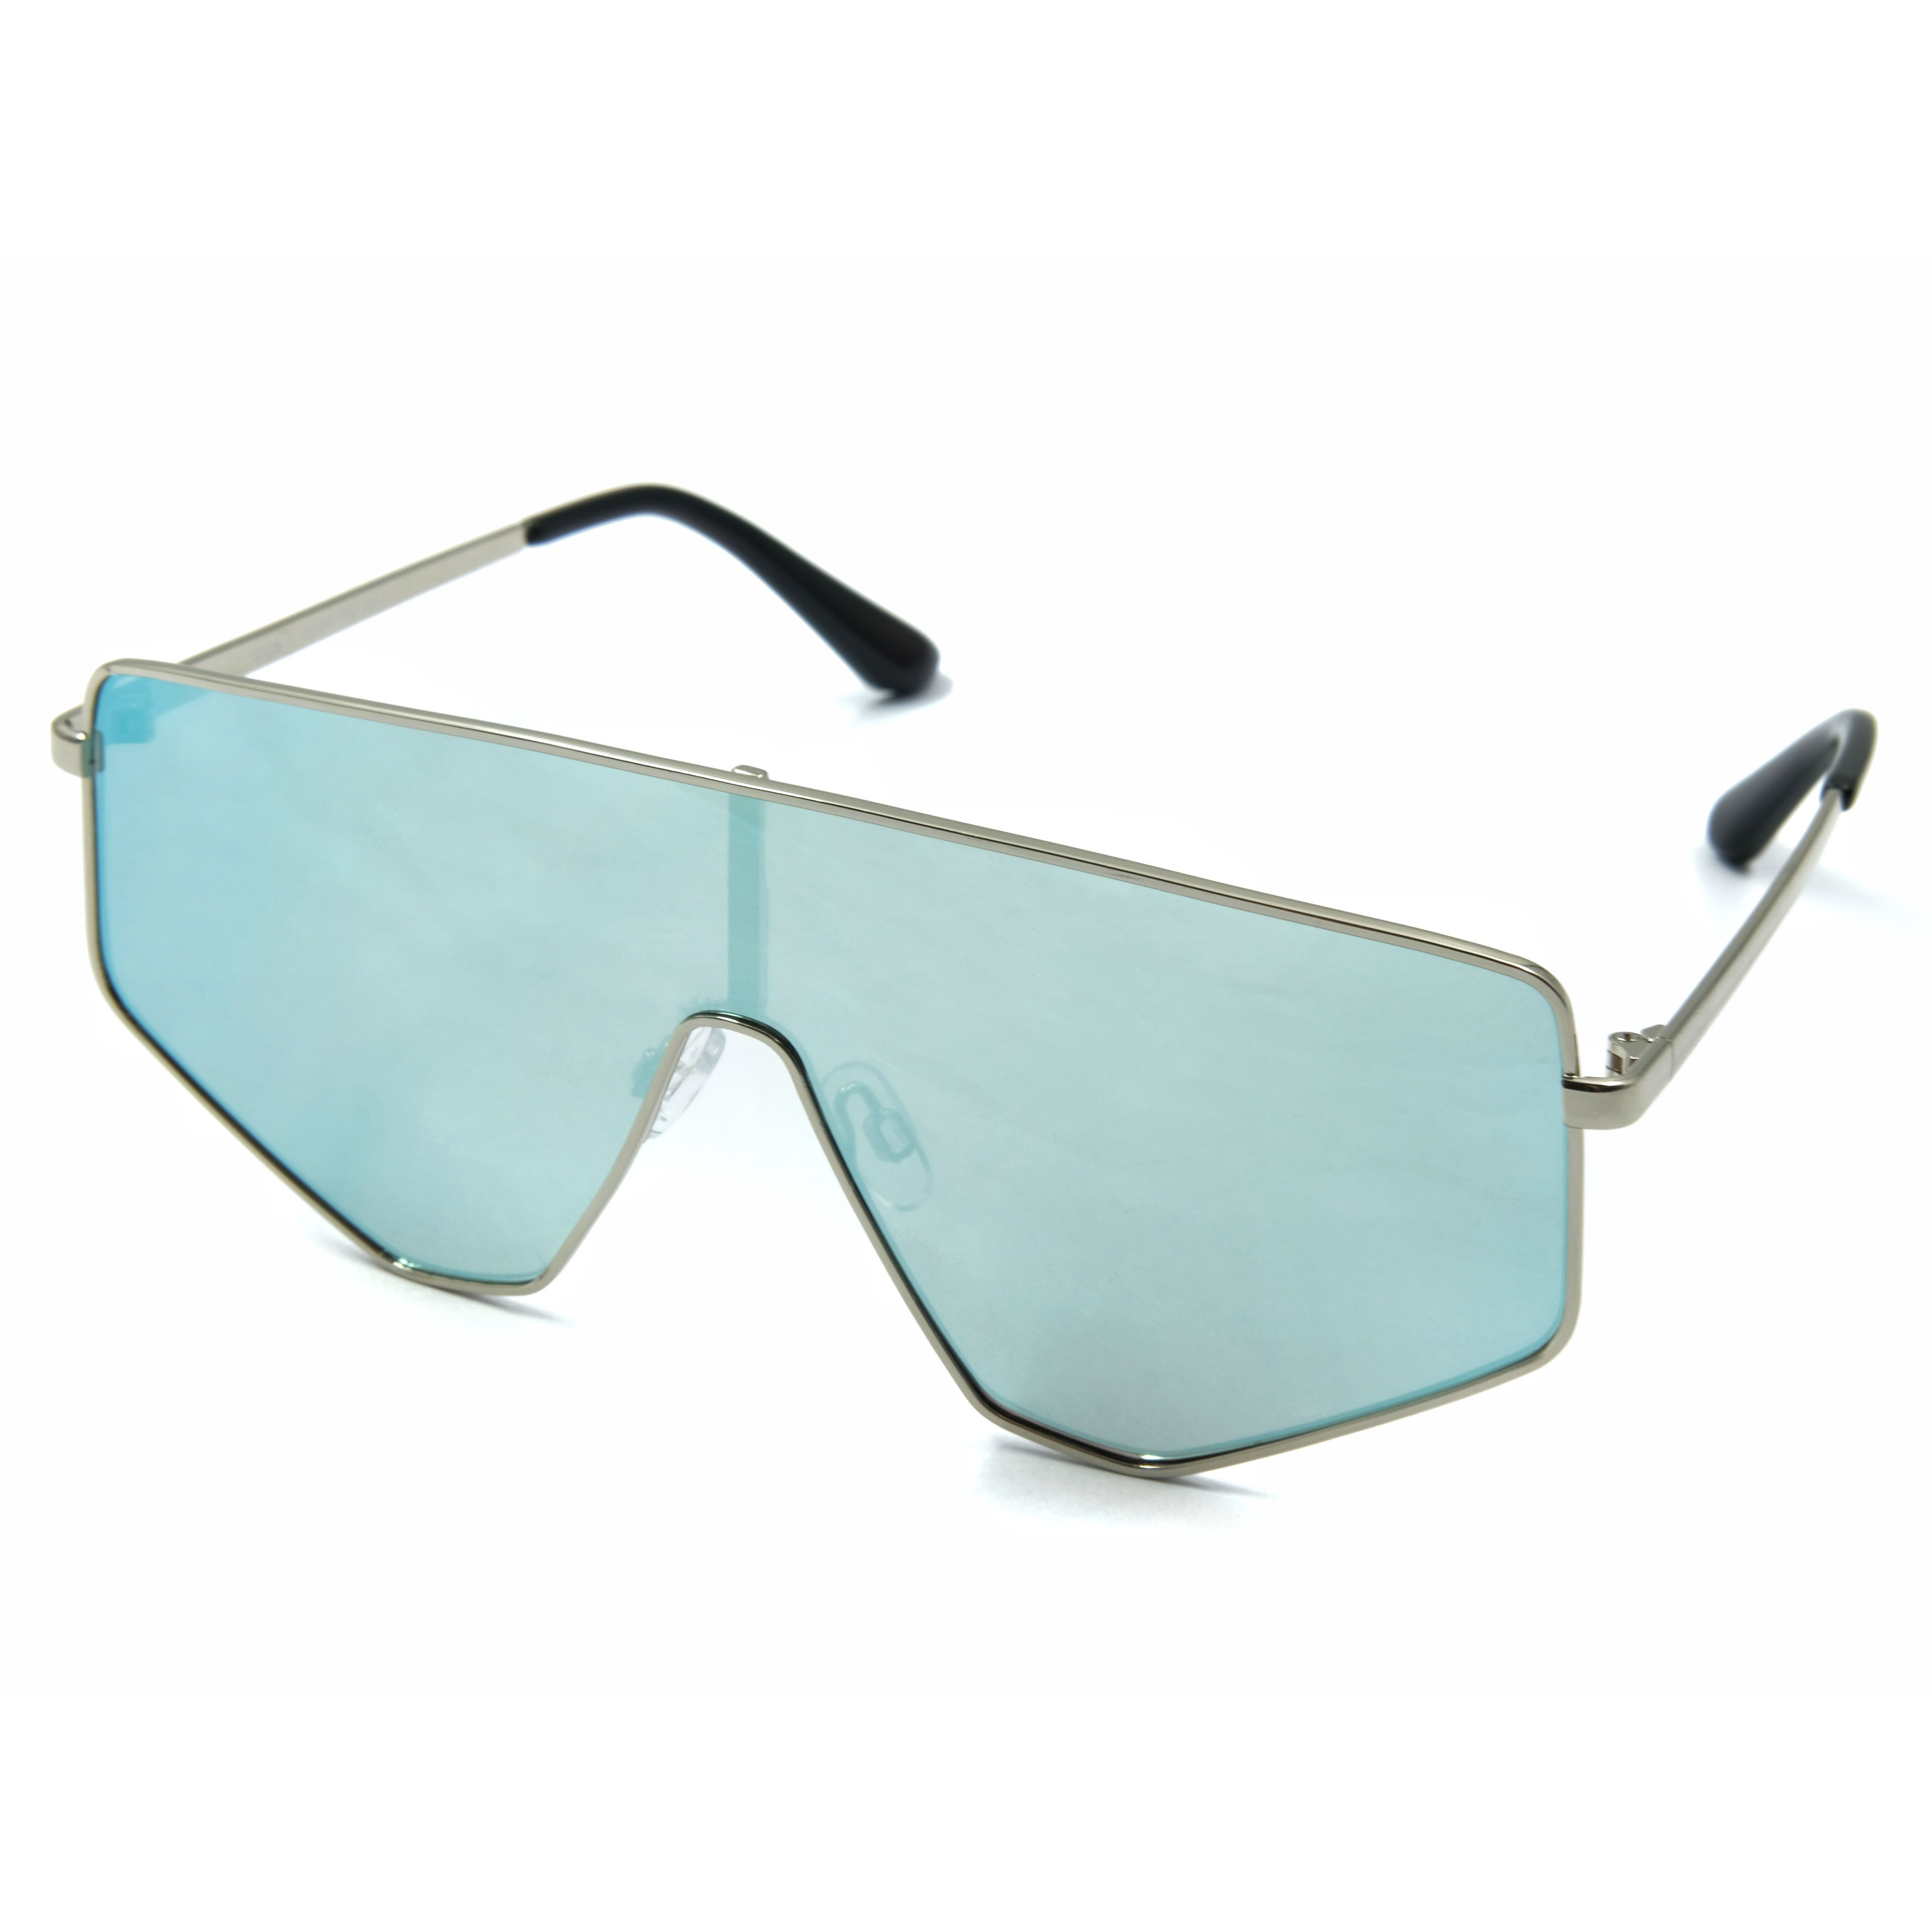 One Piece Lens Sunglasses Wholesale Designer Sunglasses Eyewear Suppliers China